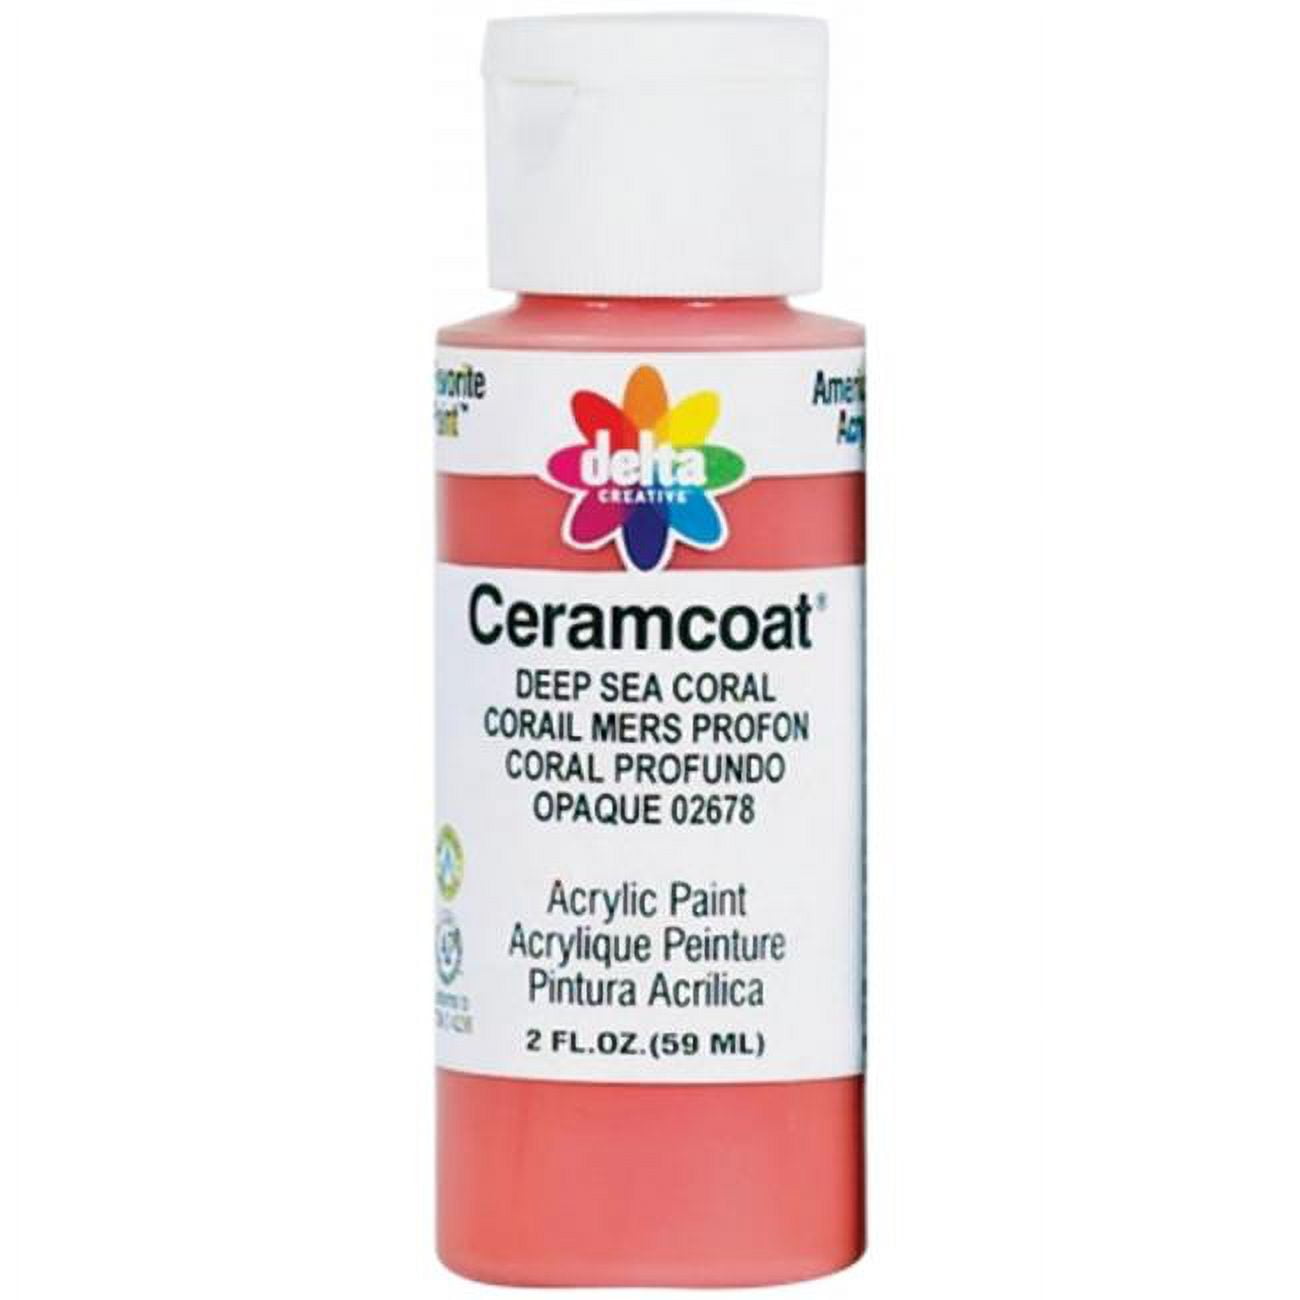 Ceramcoat Acrylic Paint 2 Ounces-Chocolate Cherry/Semi-Opaque 